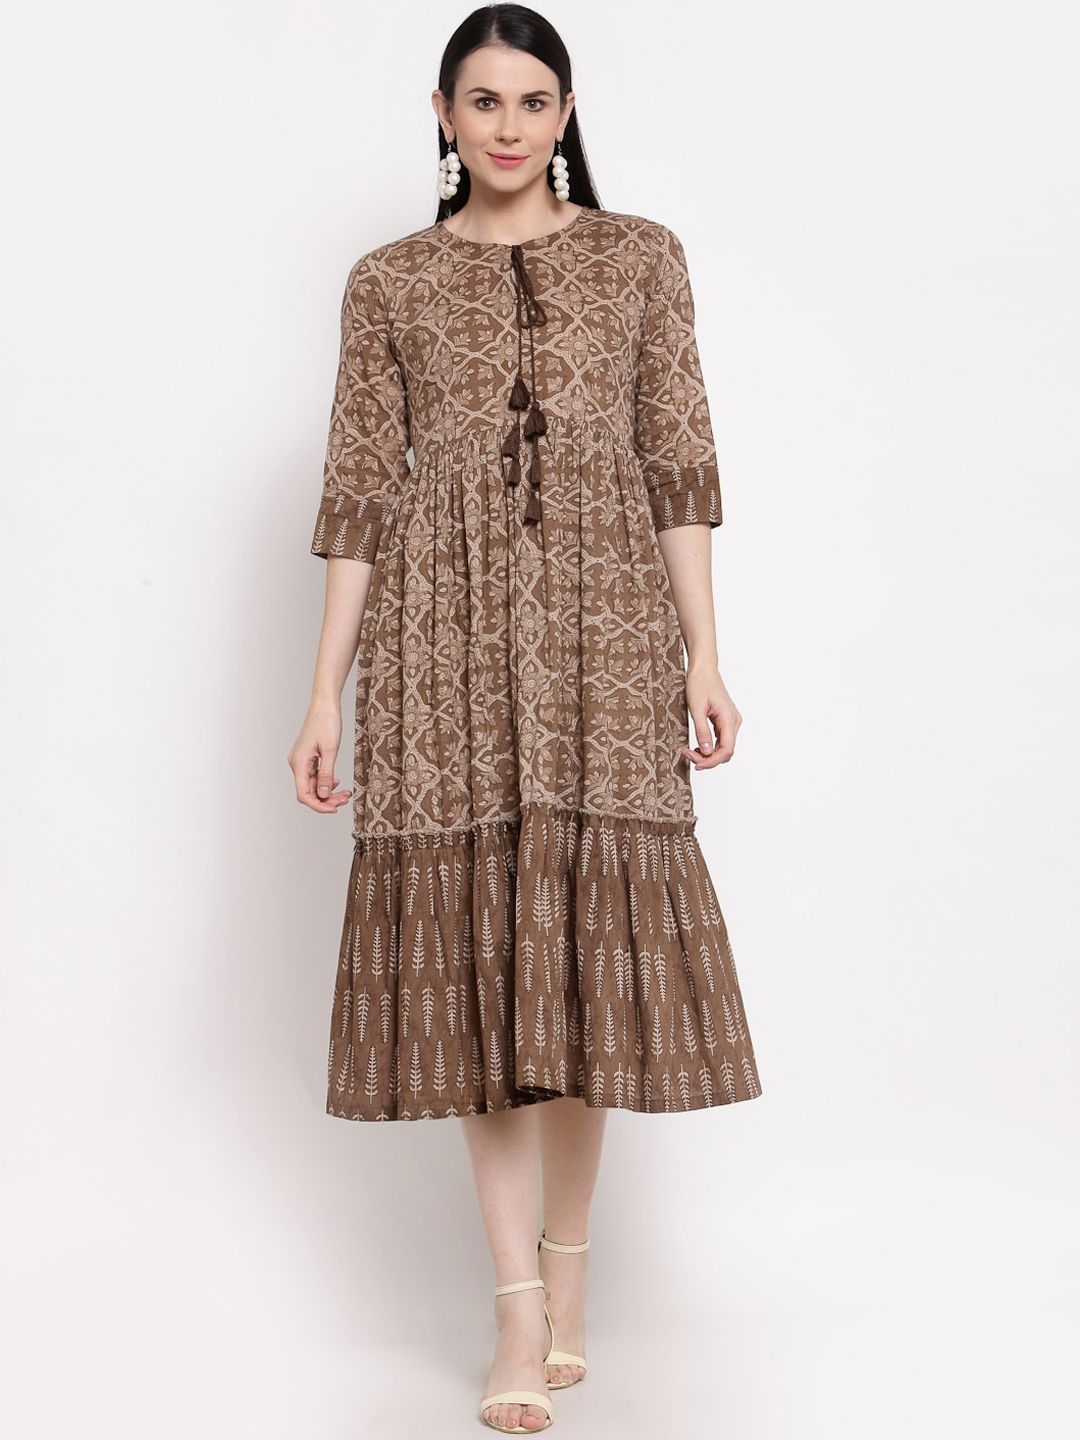 Indibelle Brown & Beige Ethnic Motifs Tie-Up Neck Cotton Ethnic A-Line Midi Dress Price in India